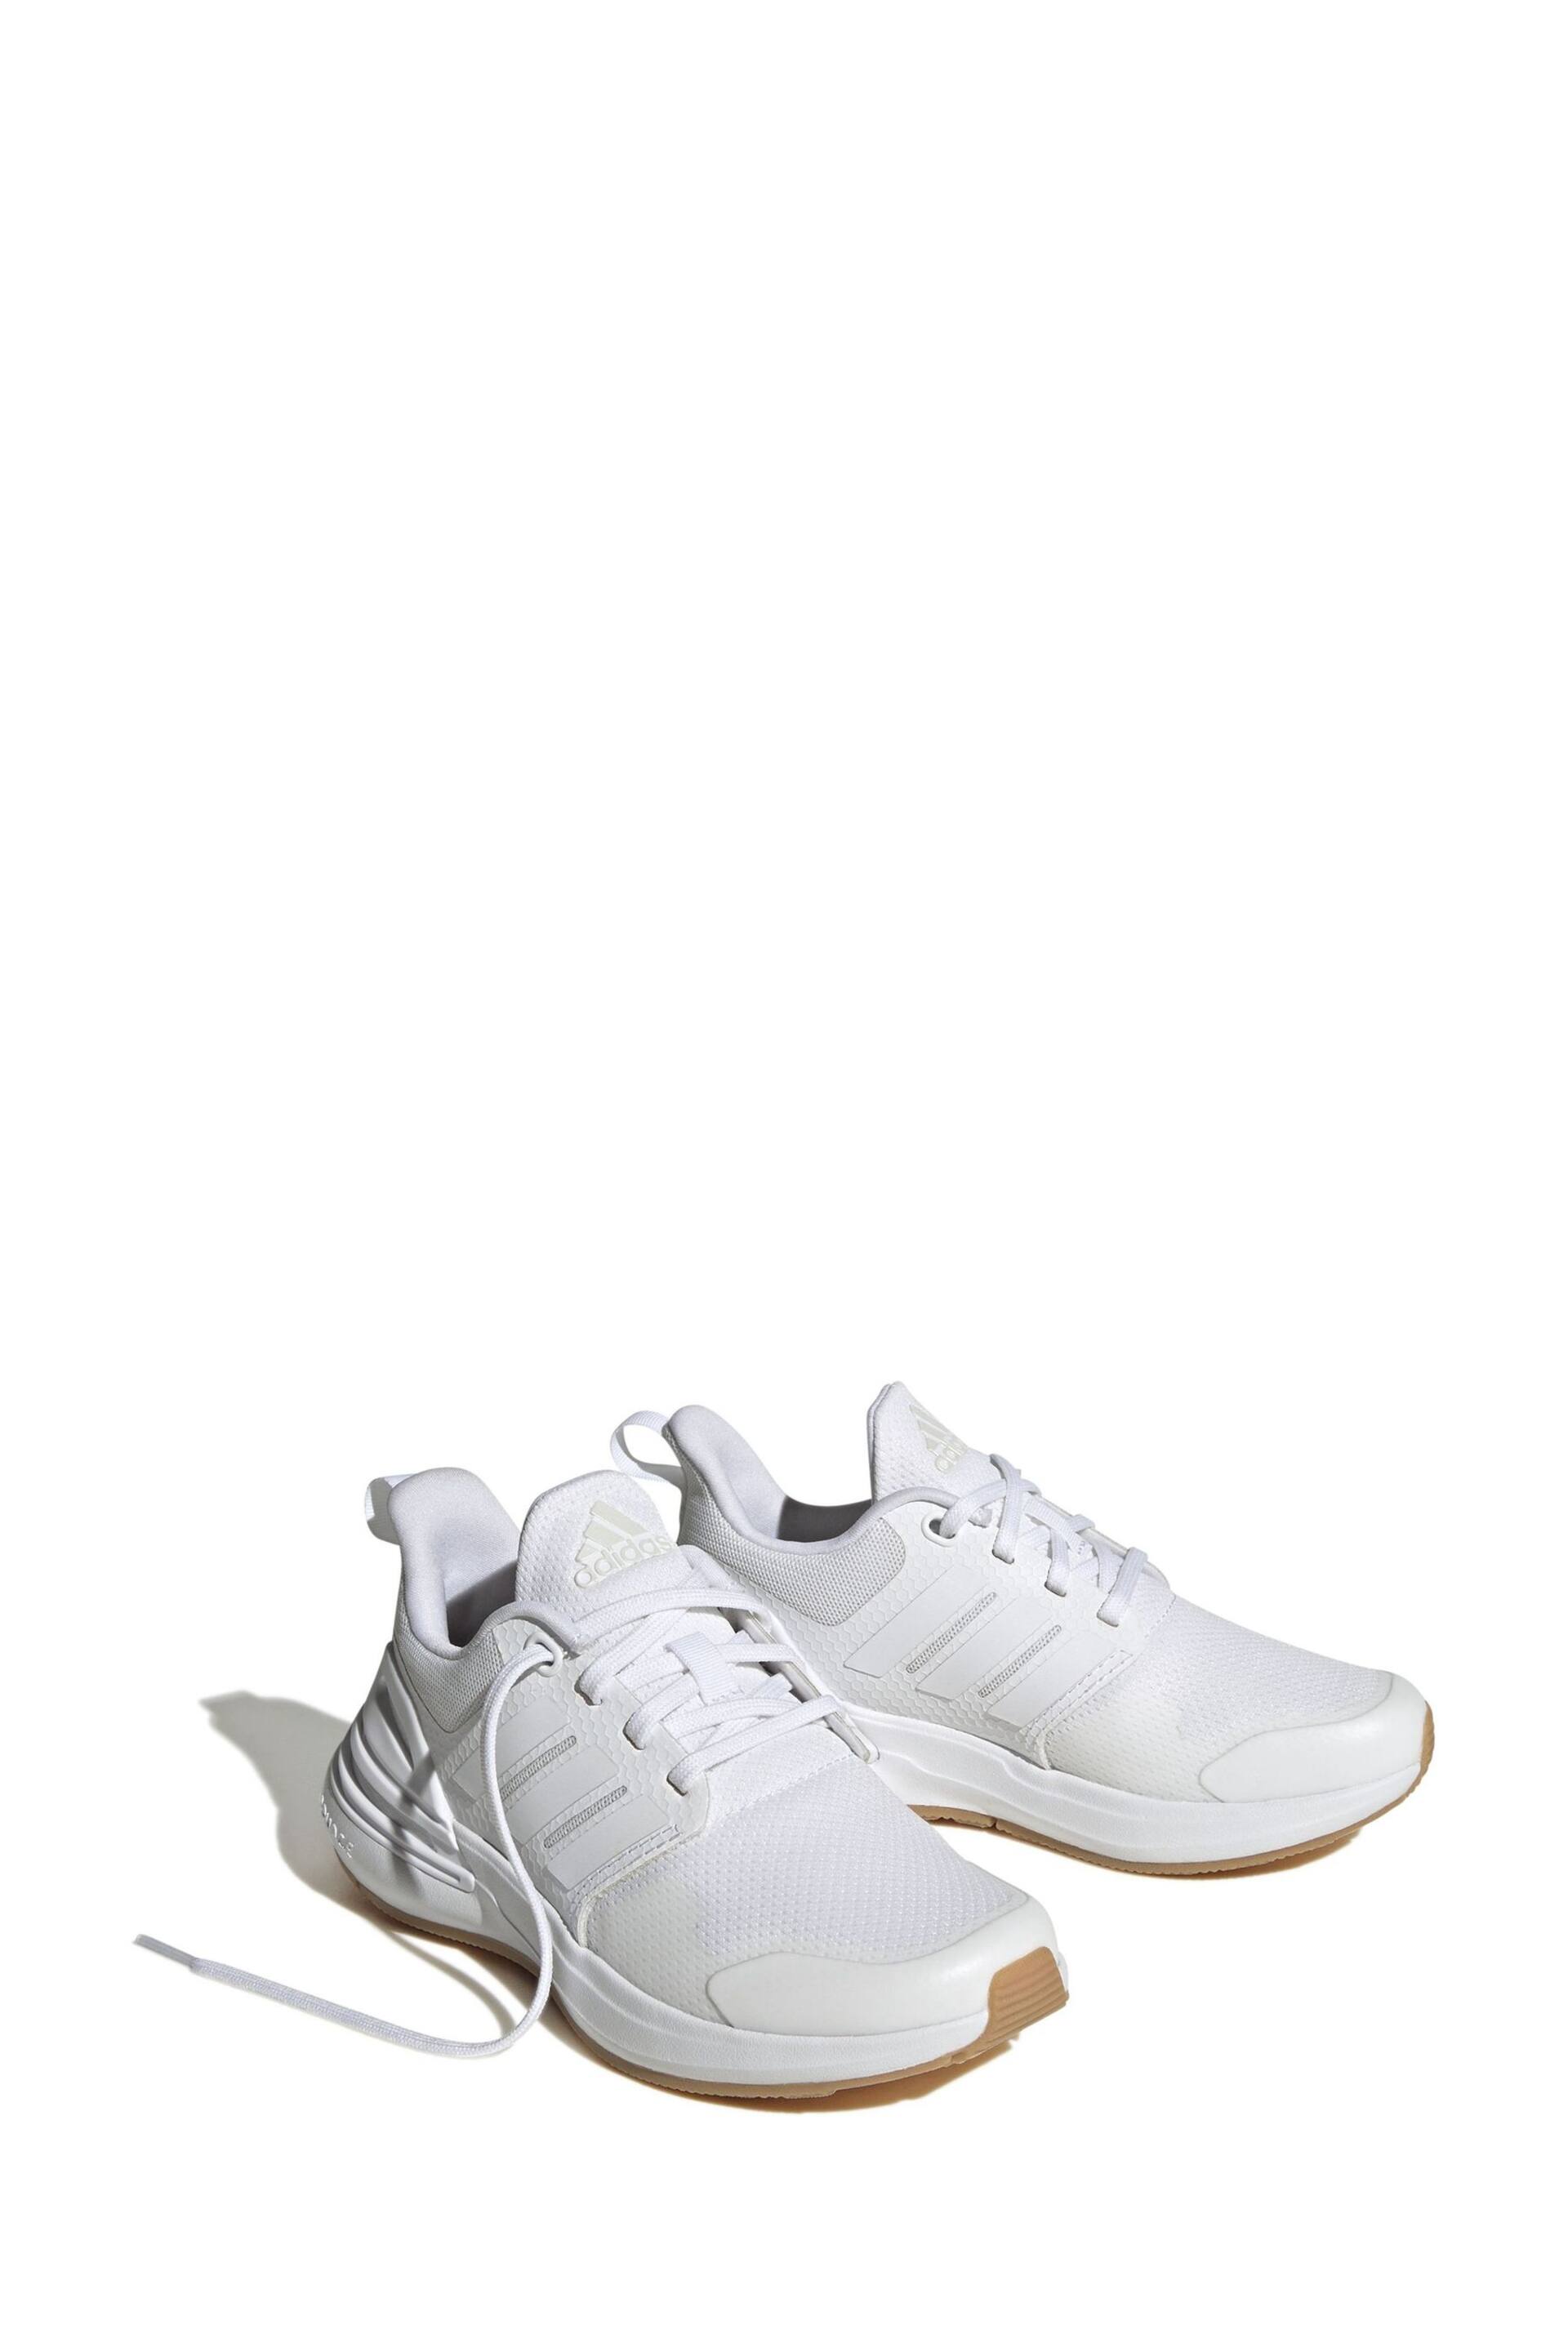 adidas White Sportswear Kids Rapidasport Bounce Lace Trainers - Image 3 of 9